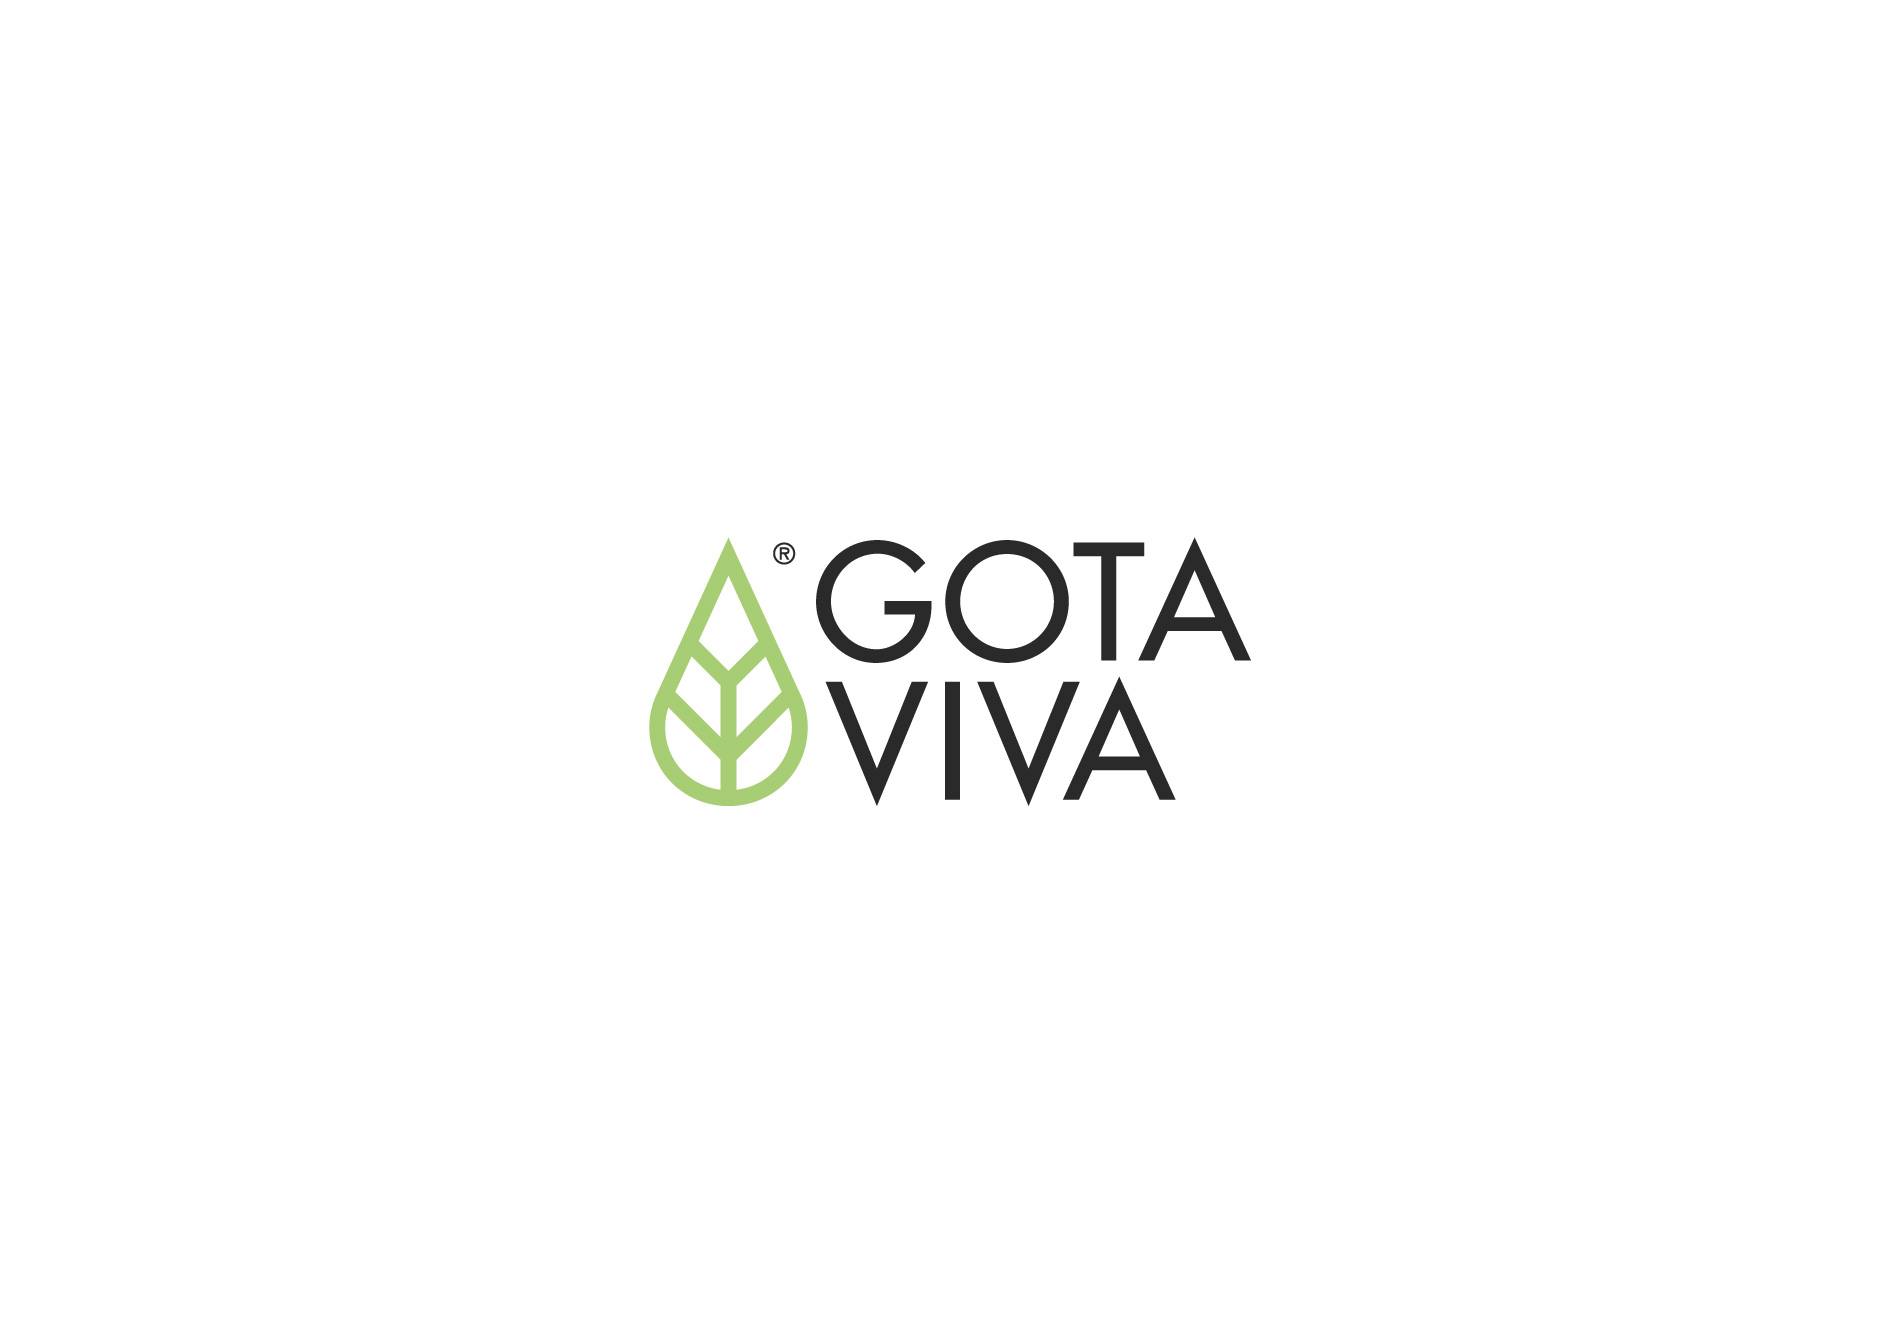 GOTA VIVA by Mutta Estudio - Creative Work